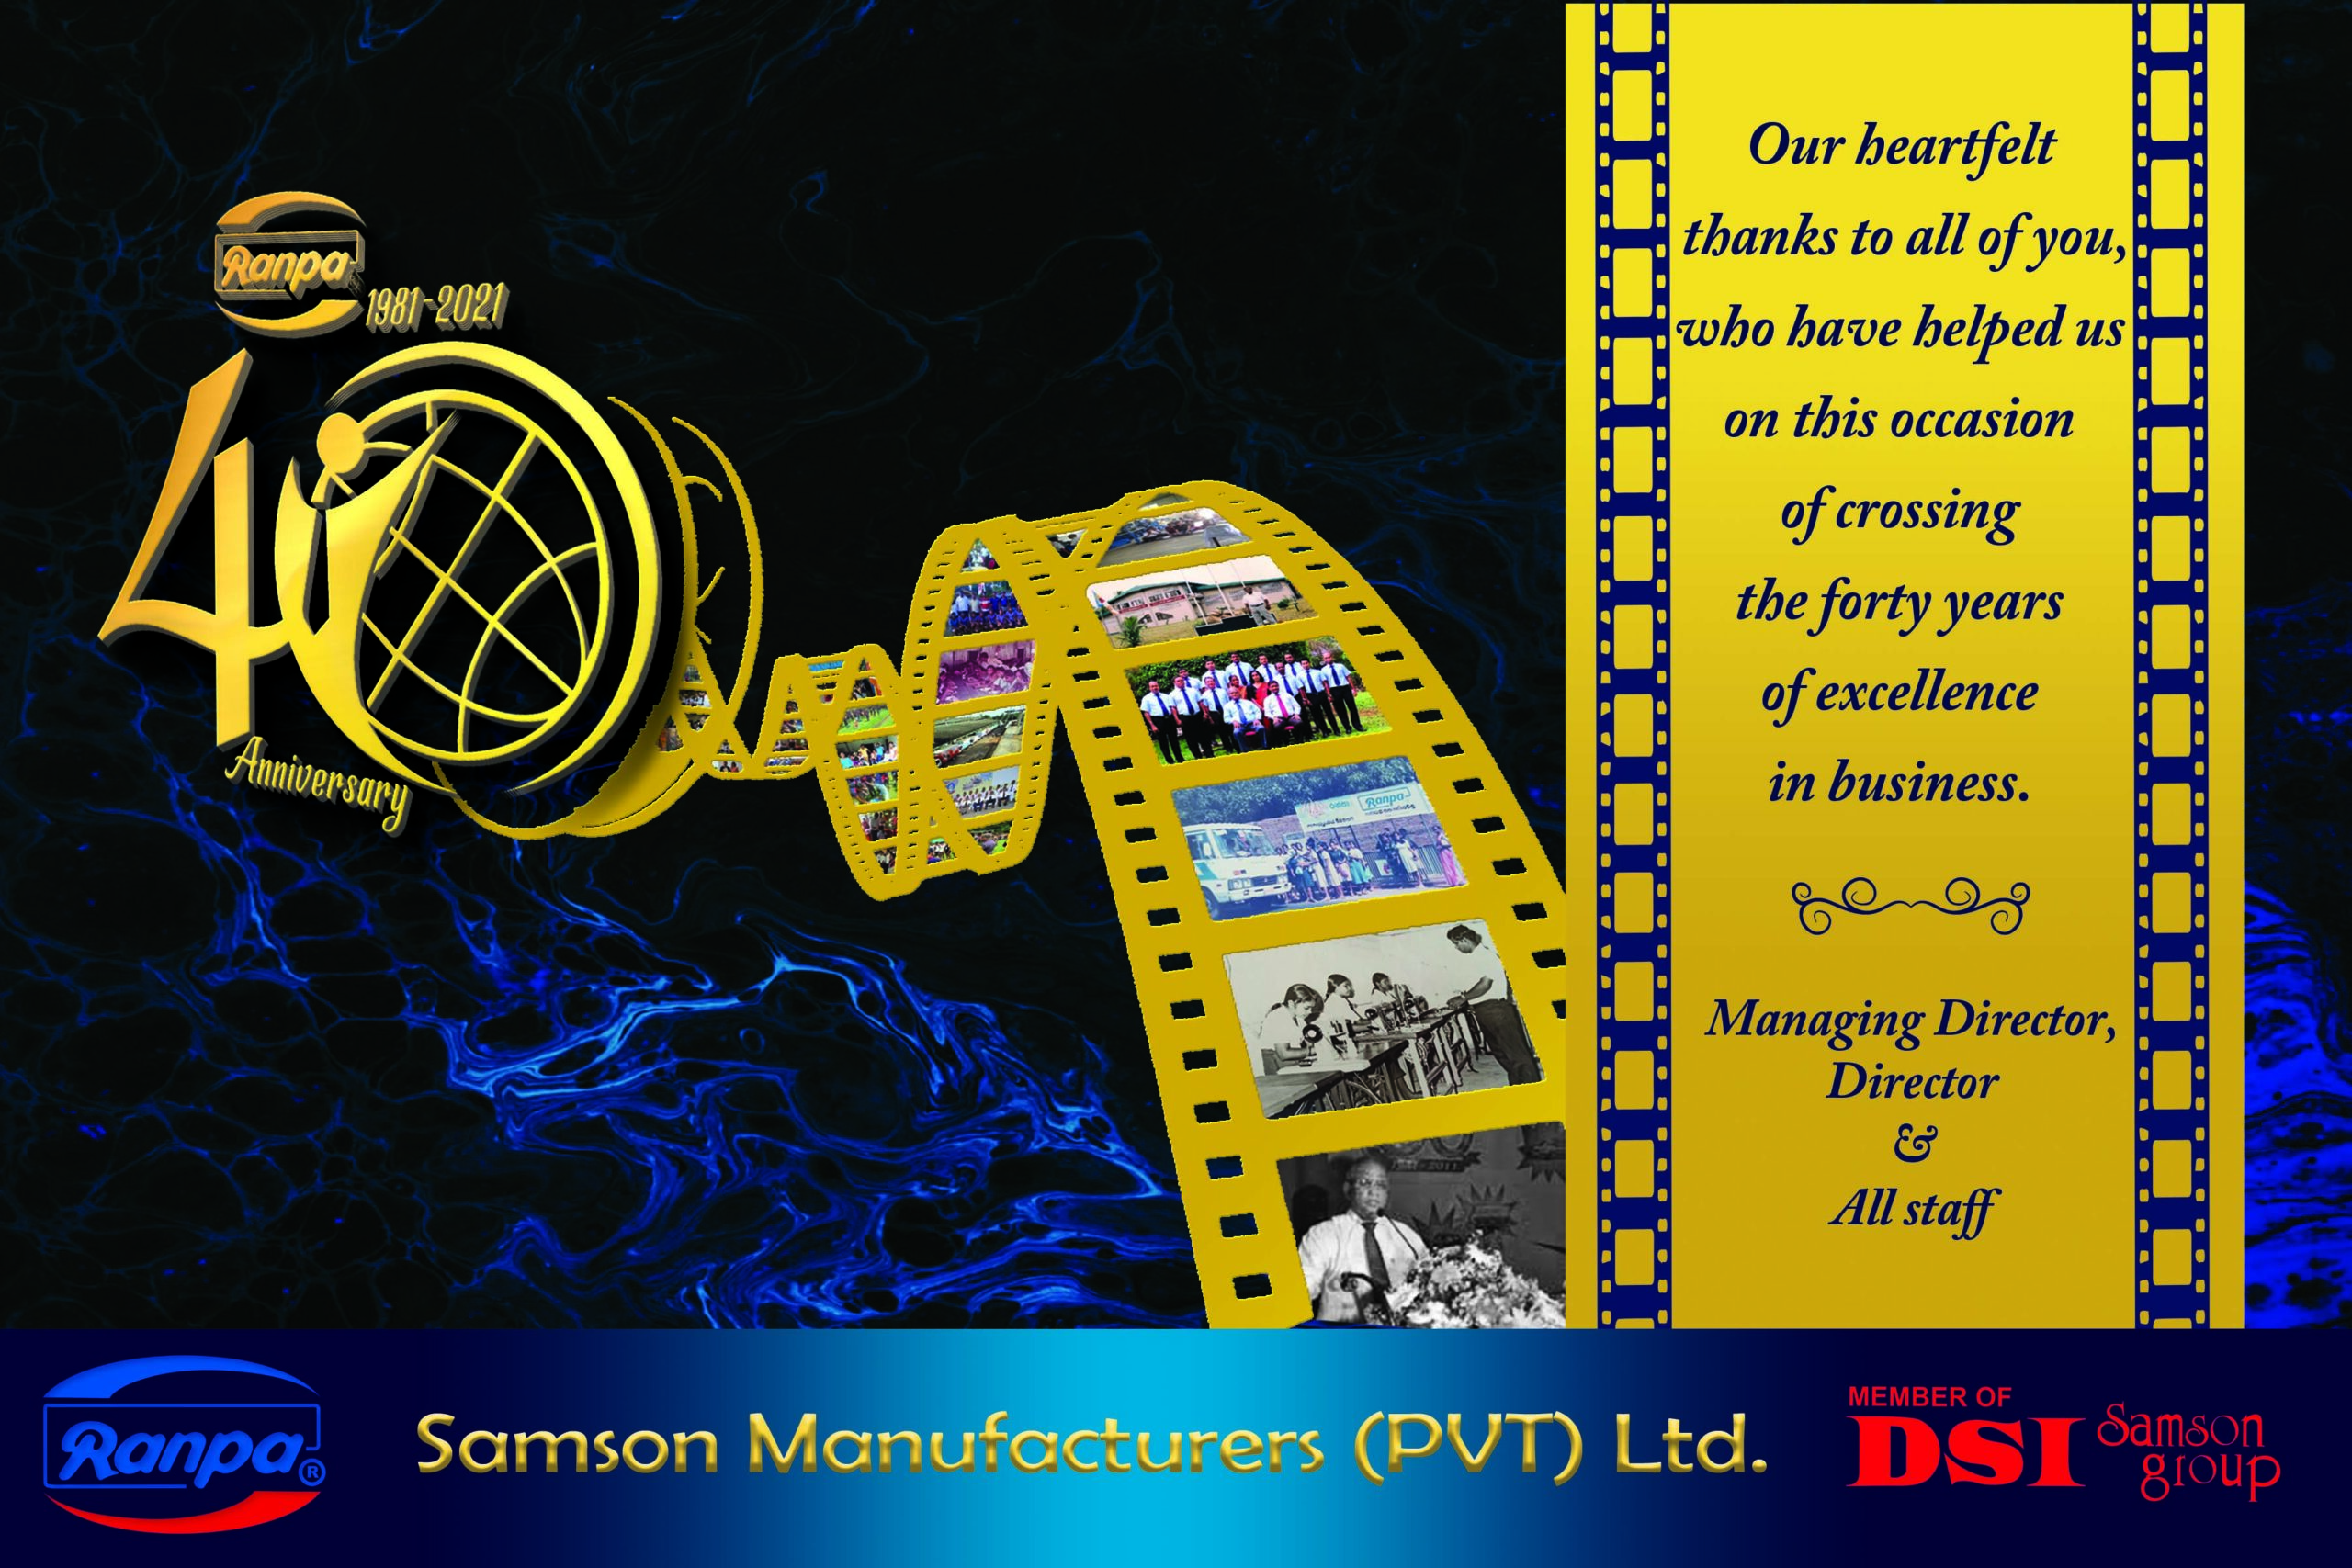 Samson Manufacturer’s (Pvt) Ltd celebrated its 40th anniversary.